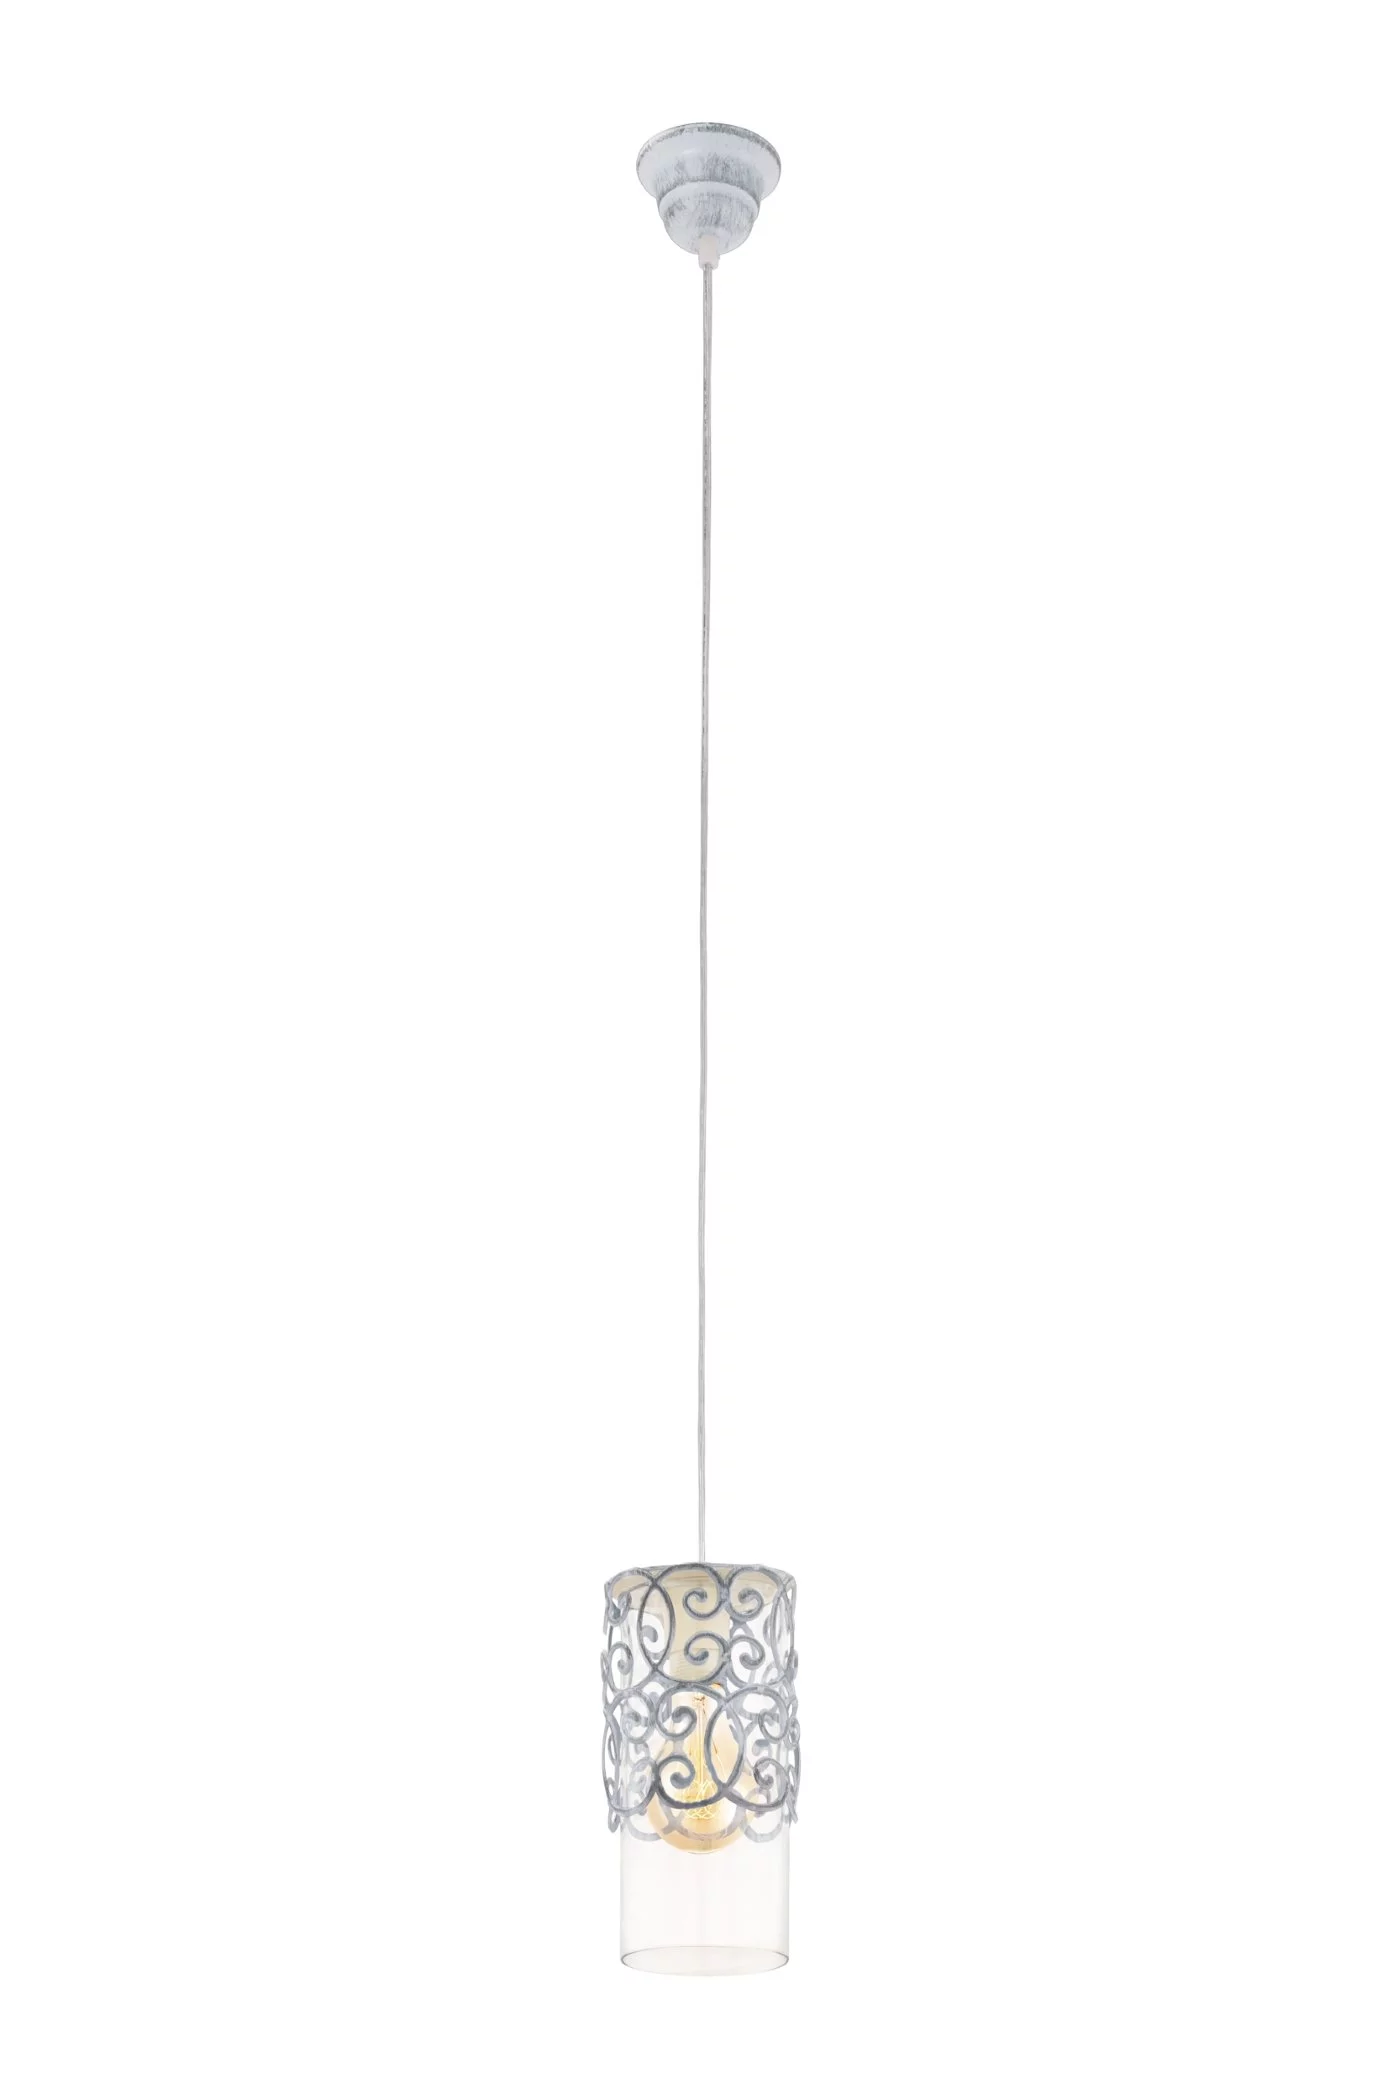   
                        
                        Люстра EGLO (Австрия) 74478    
                         в стиле Флористика.  
                        Тип источника света: светодиодная лампа, сменная.                         Форма: Цилиндр.                         Цвета плафонов и подвесок: Прозрачный.                         Материал: Стекло.                          фото 1